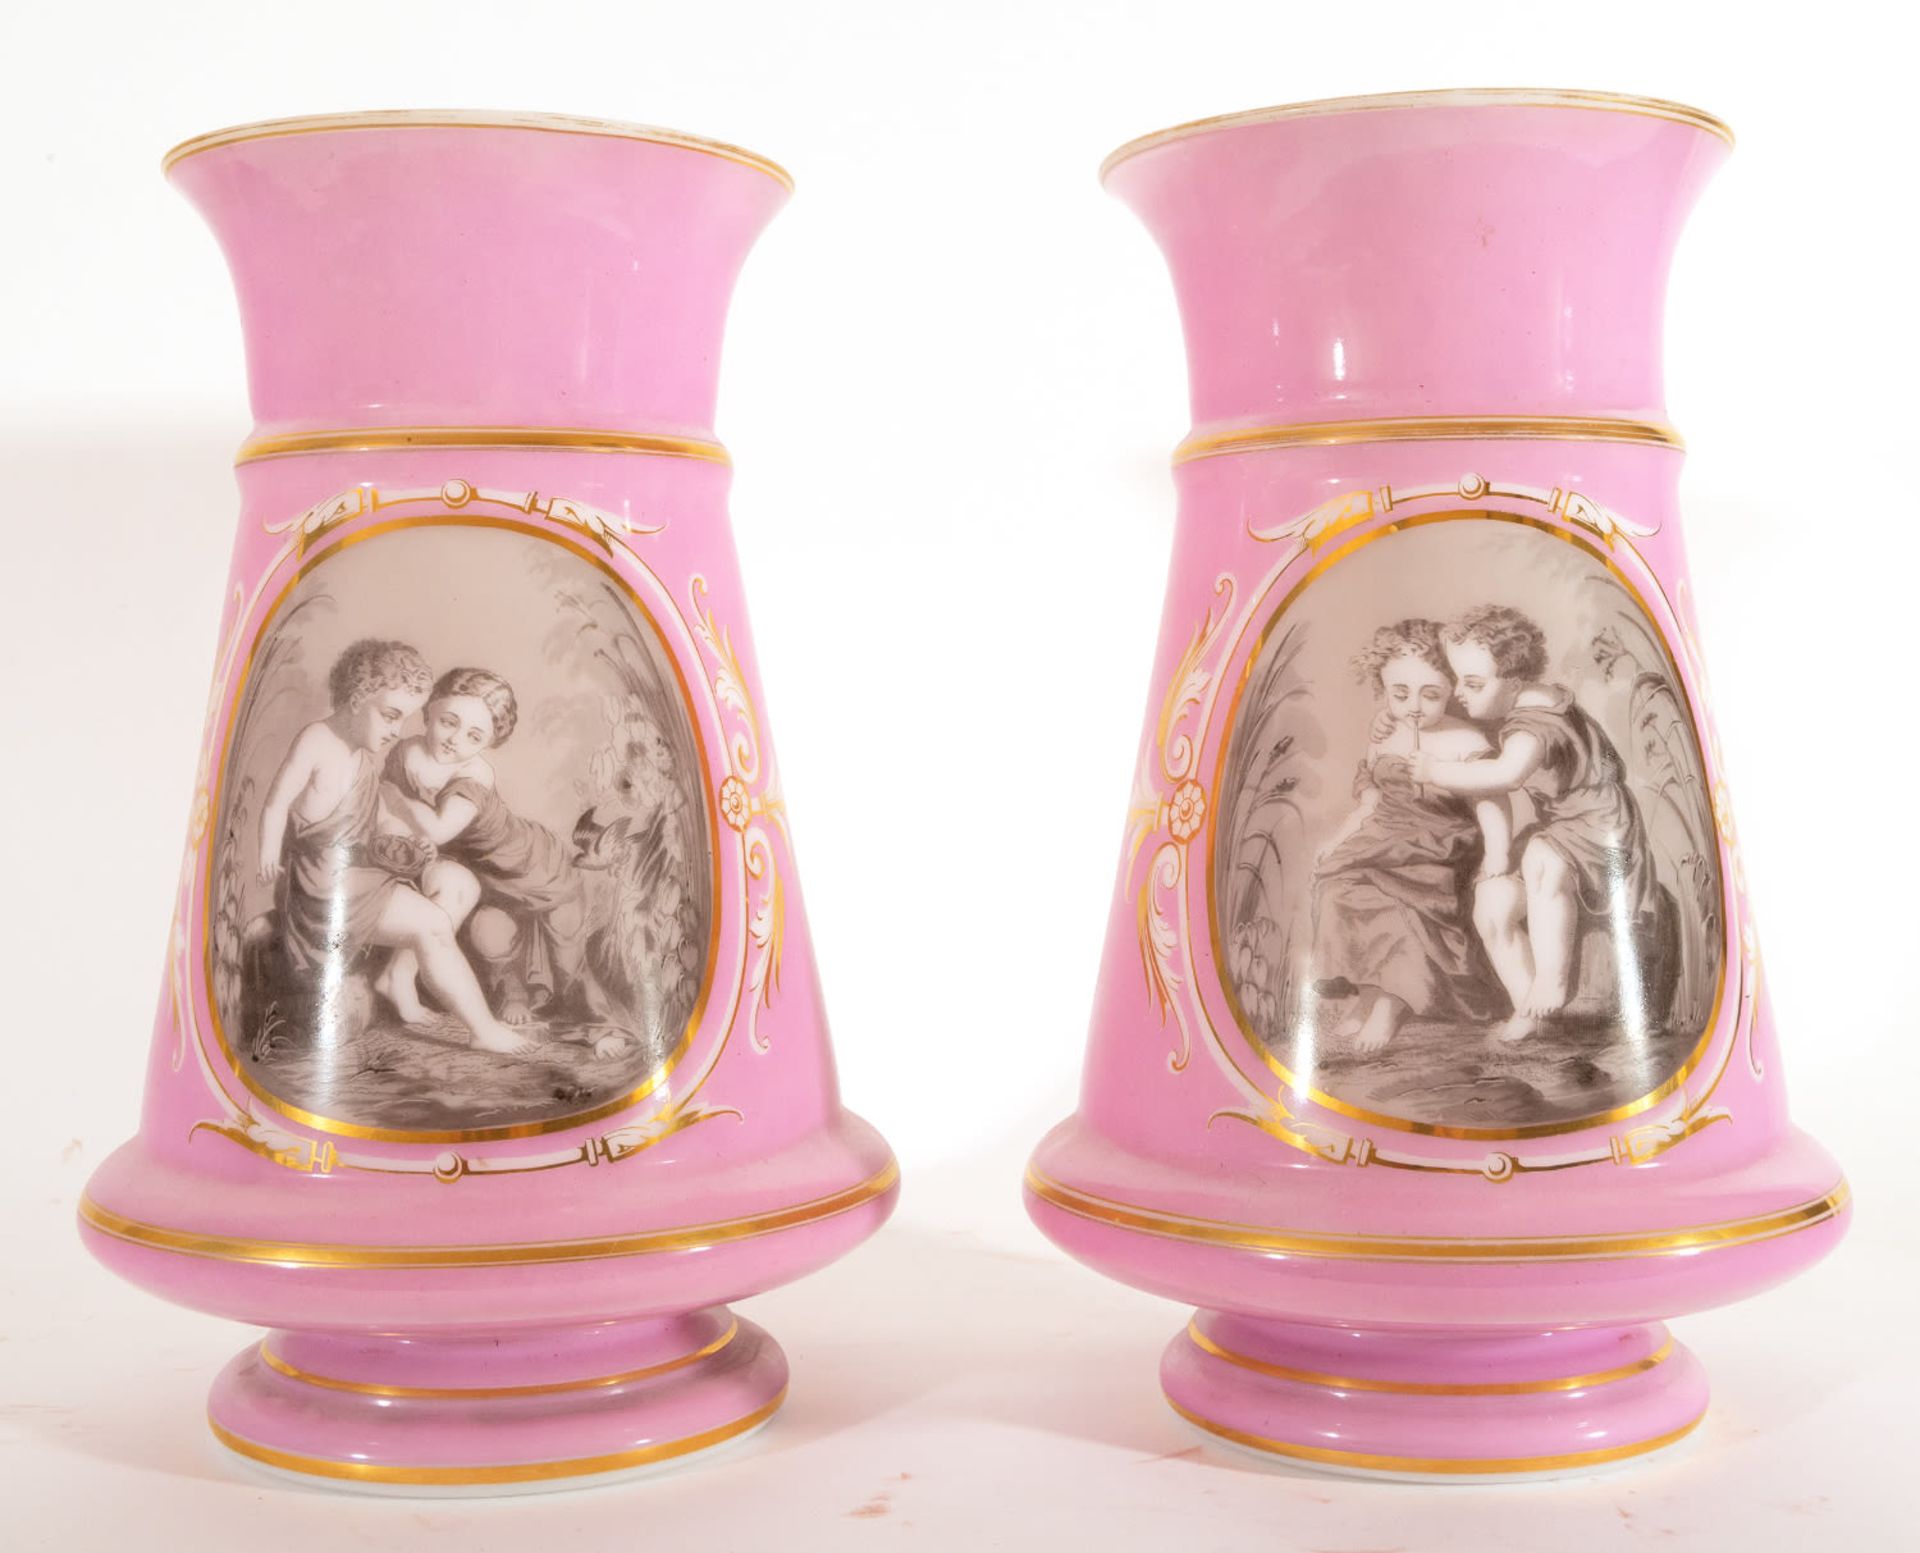 Pair of Opaline Vases with Romantic Scenes, 19th century